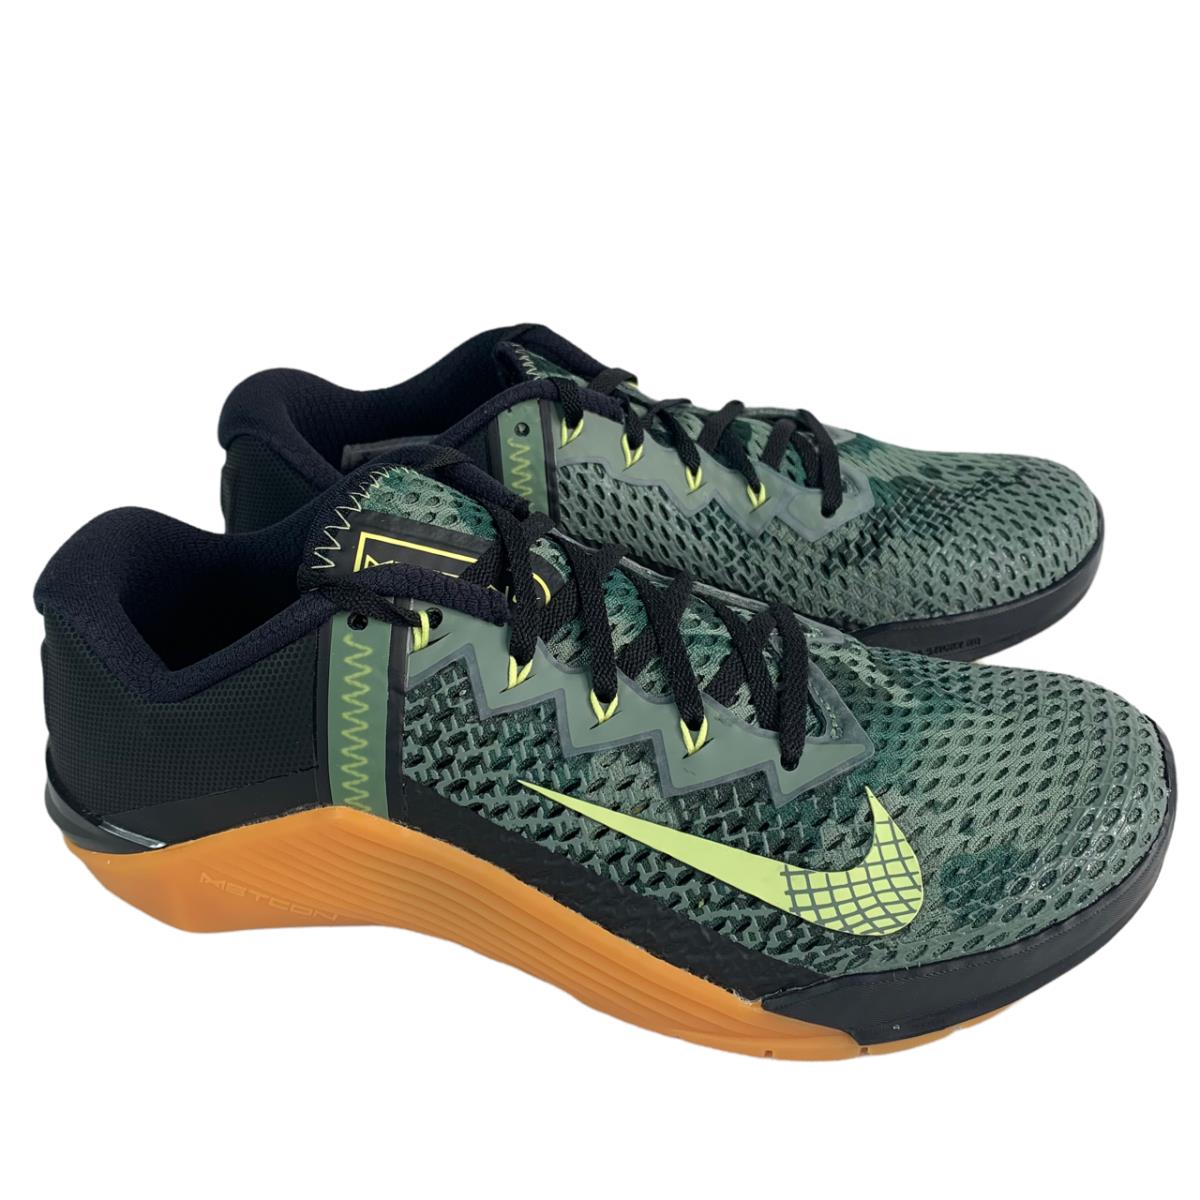 Nike Metcon 6 Black/limelight Training Shoe Men`s Size 9 CK9388 032